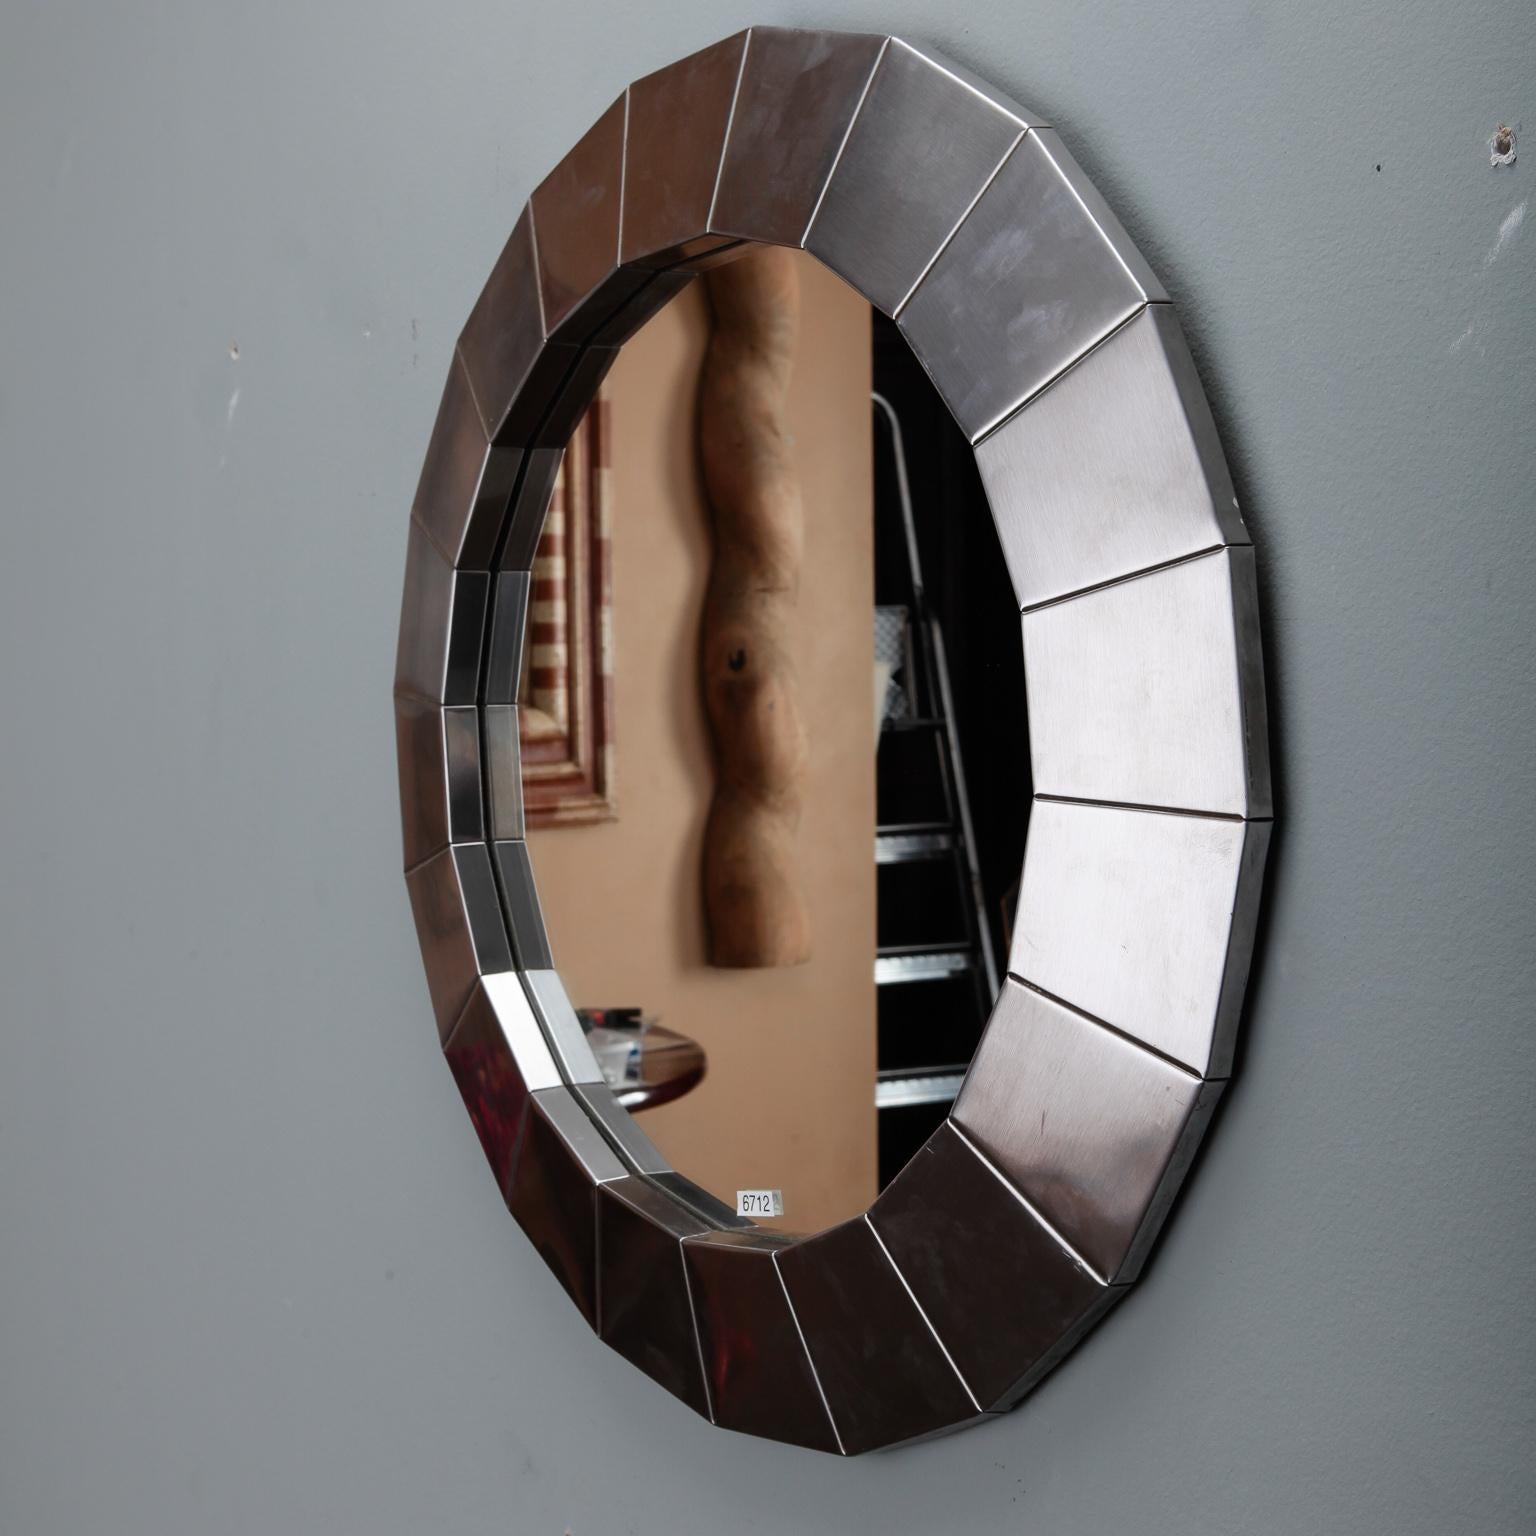 European Midcentury Round Mirror with Brushed Aluminum Frame